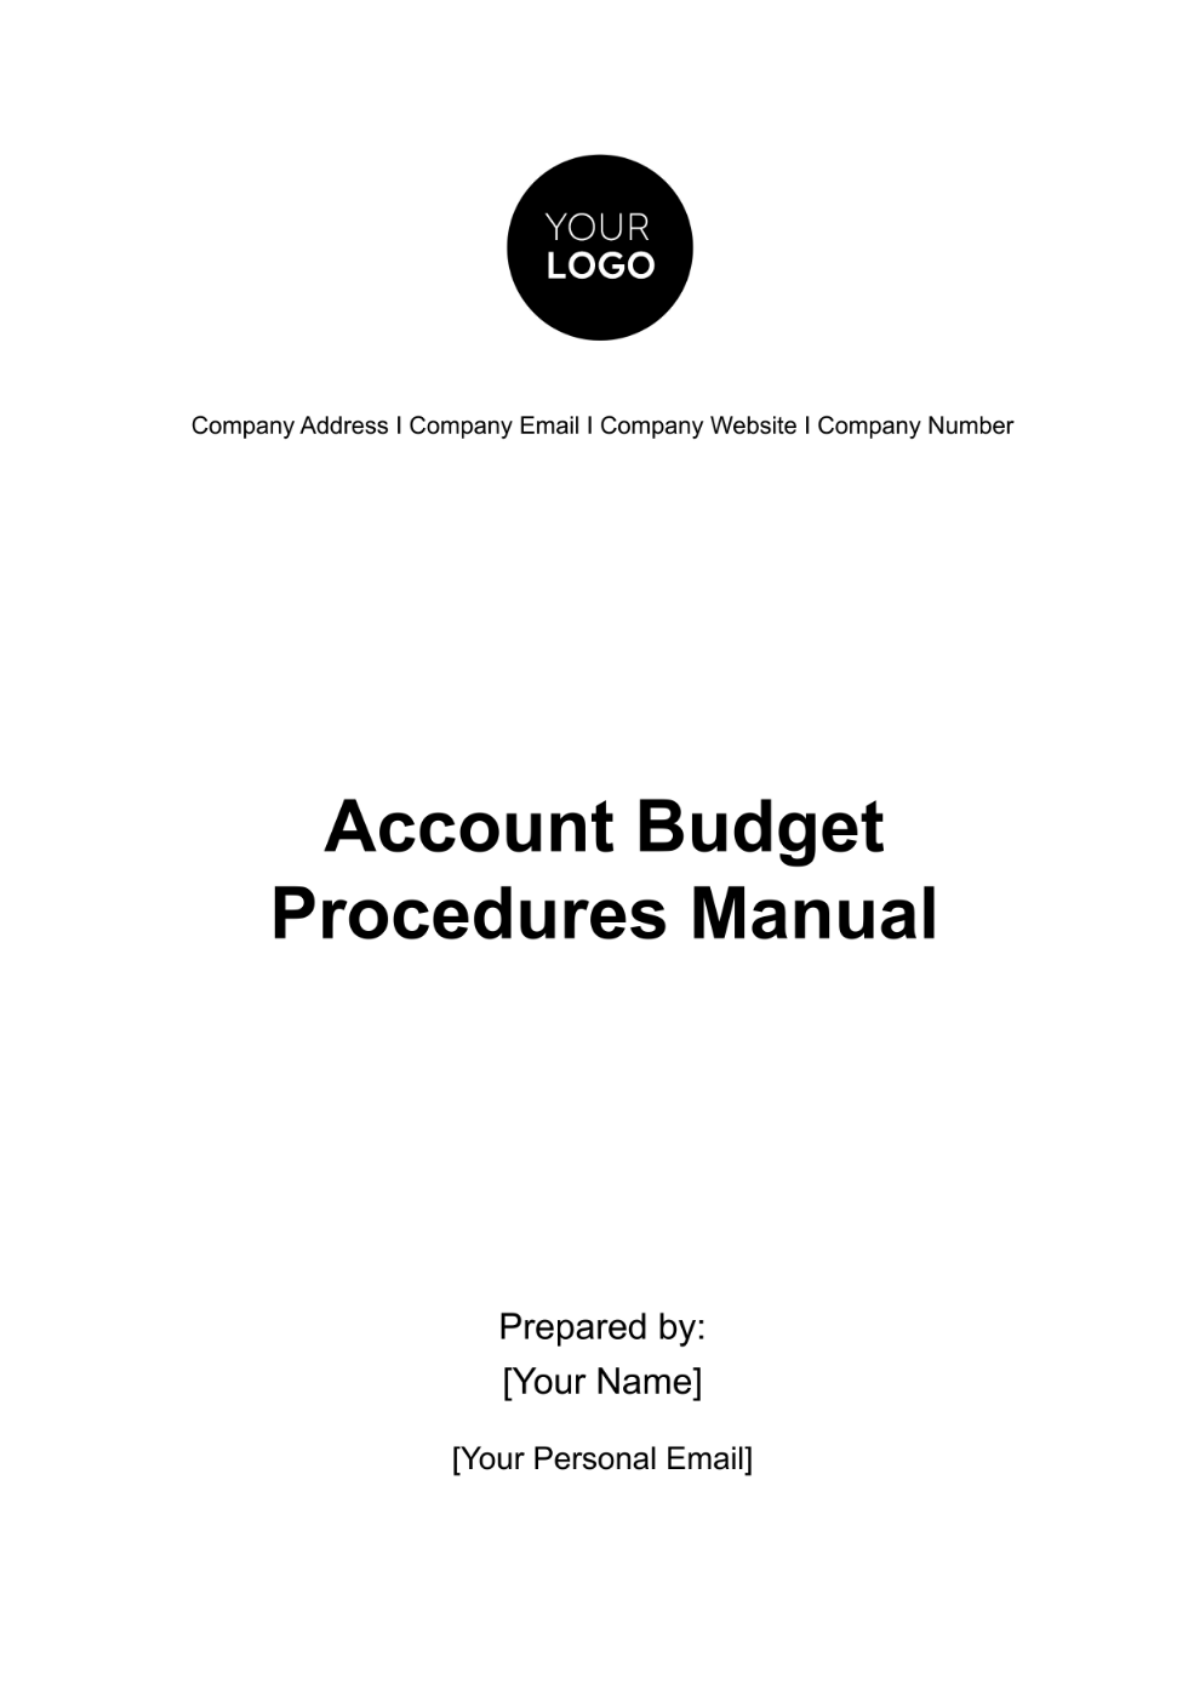 Account Budget Procedures Manual Template